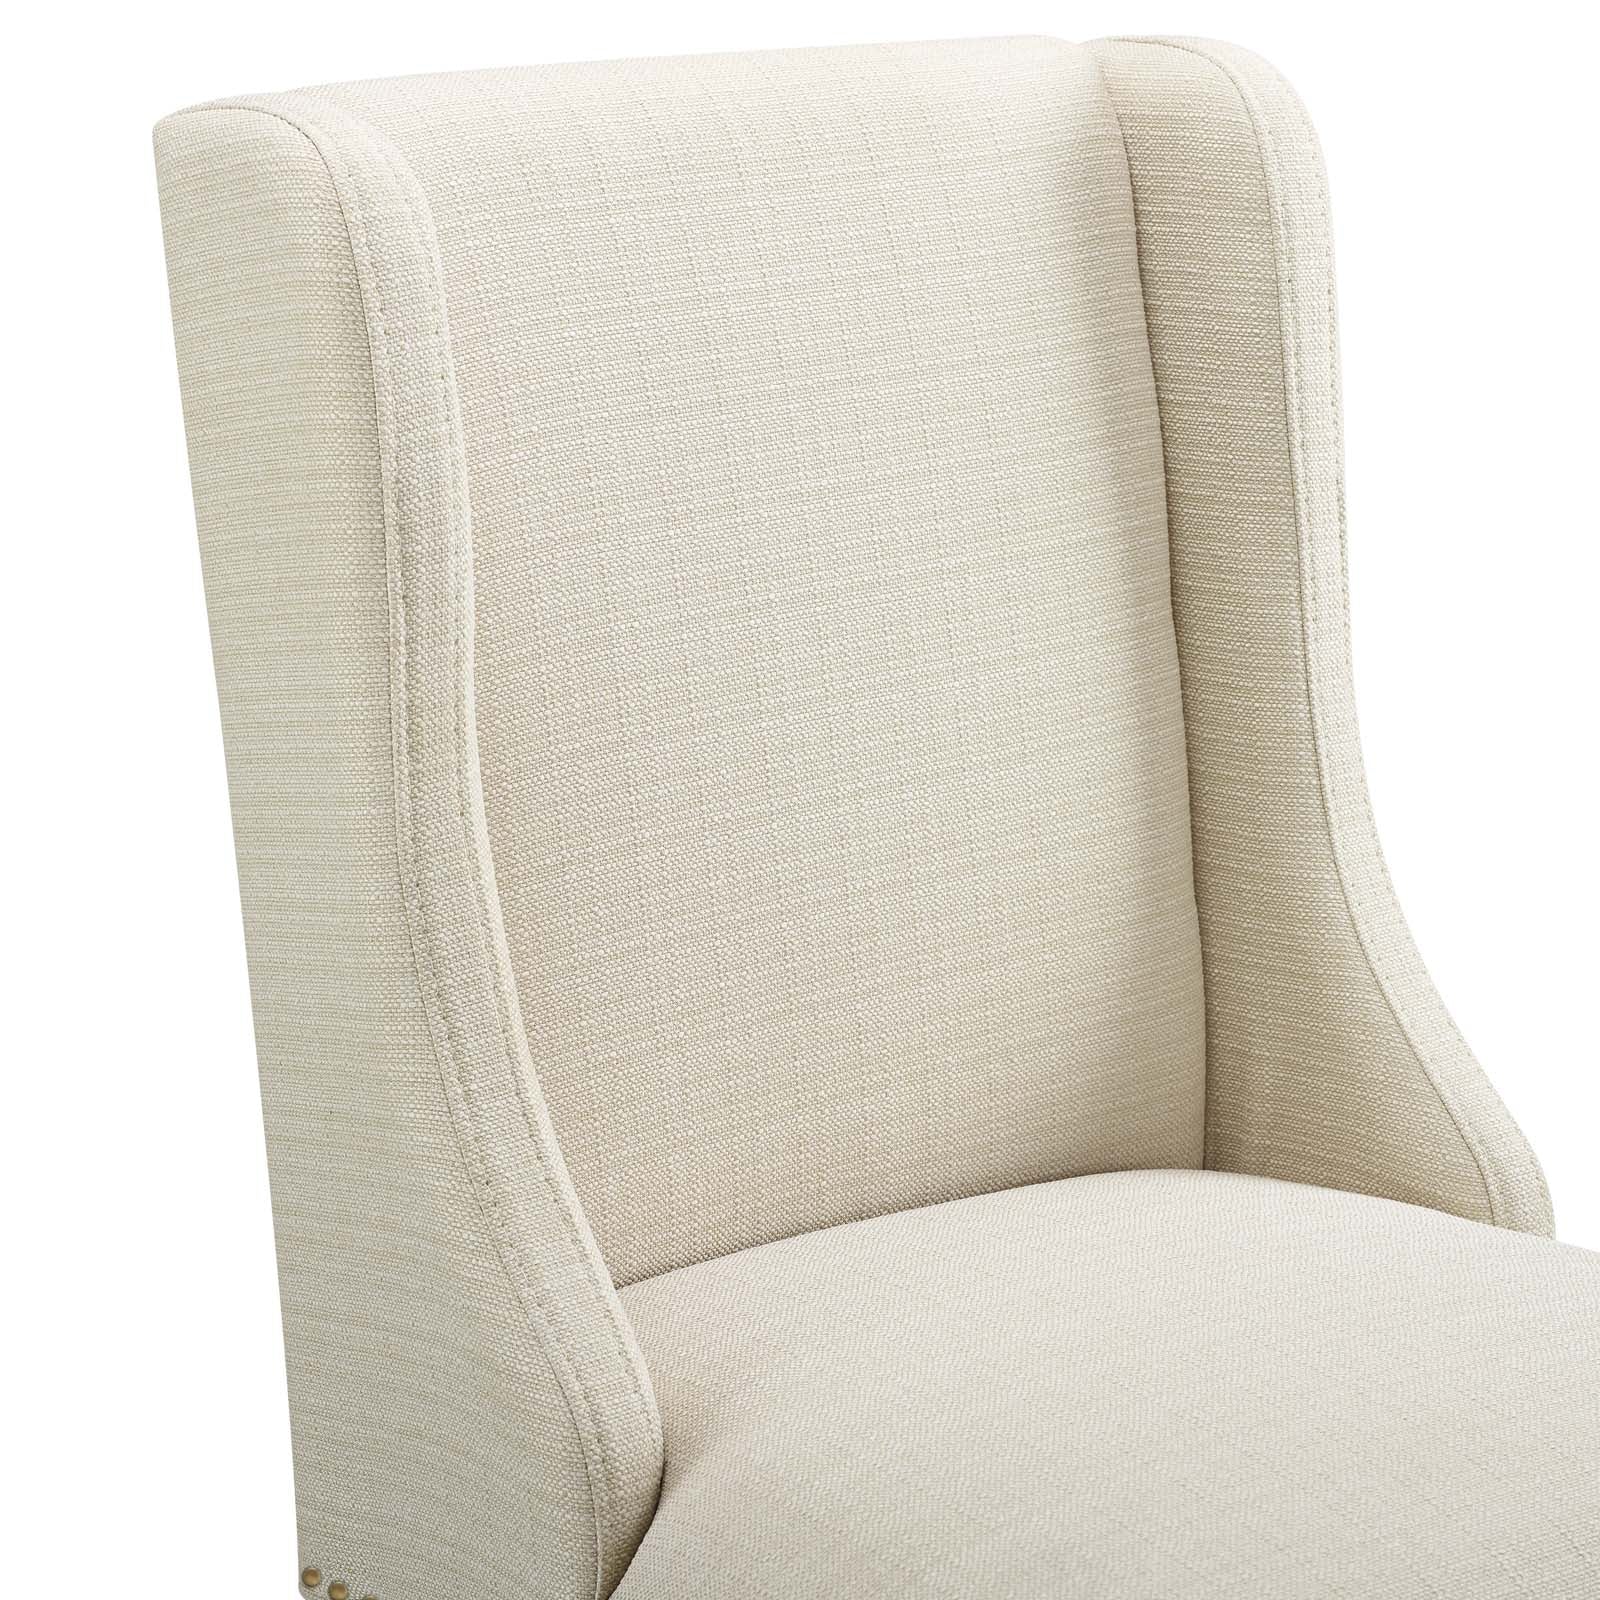 Baron Upholstered Fabric Counter Stool - East Shore Modern Home Furnishings